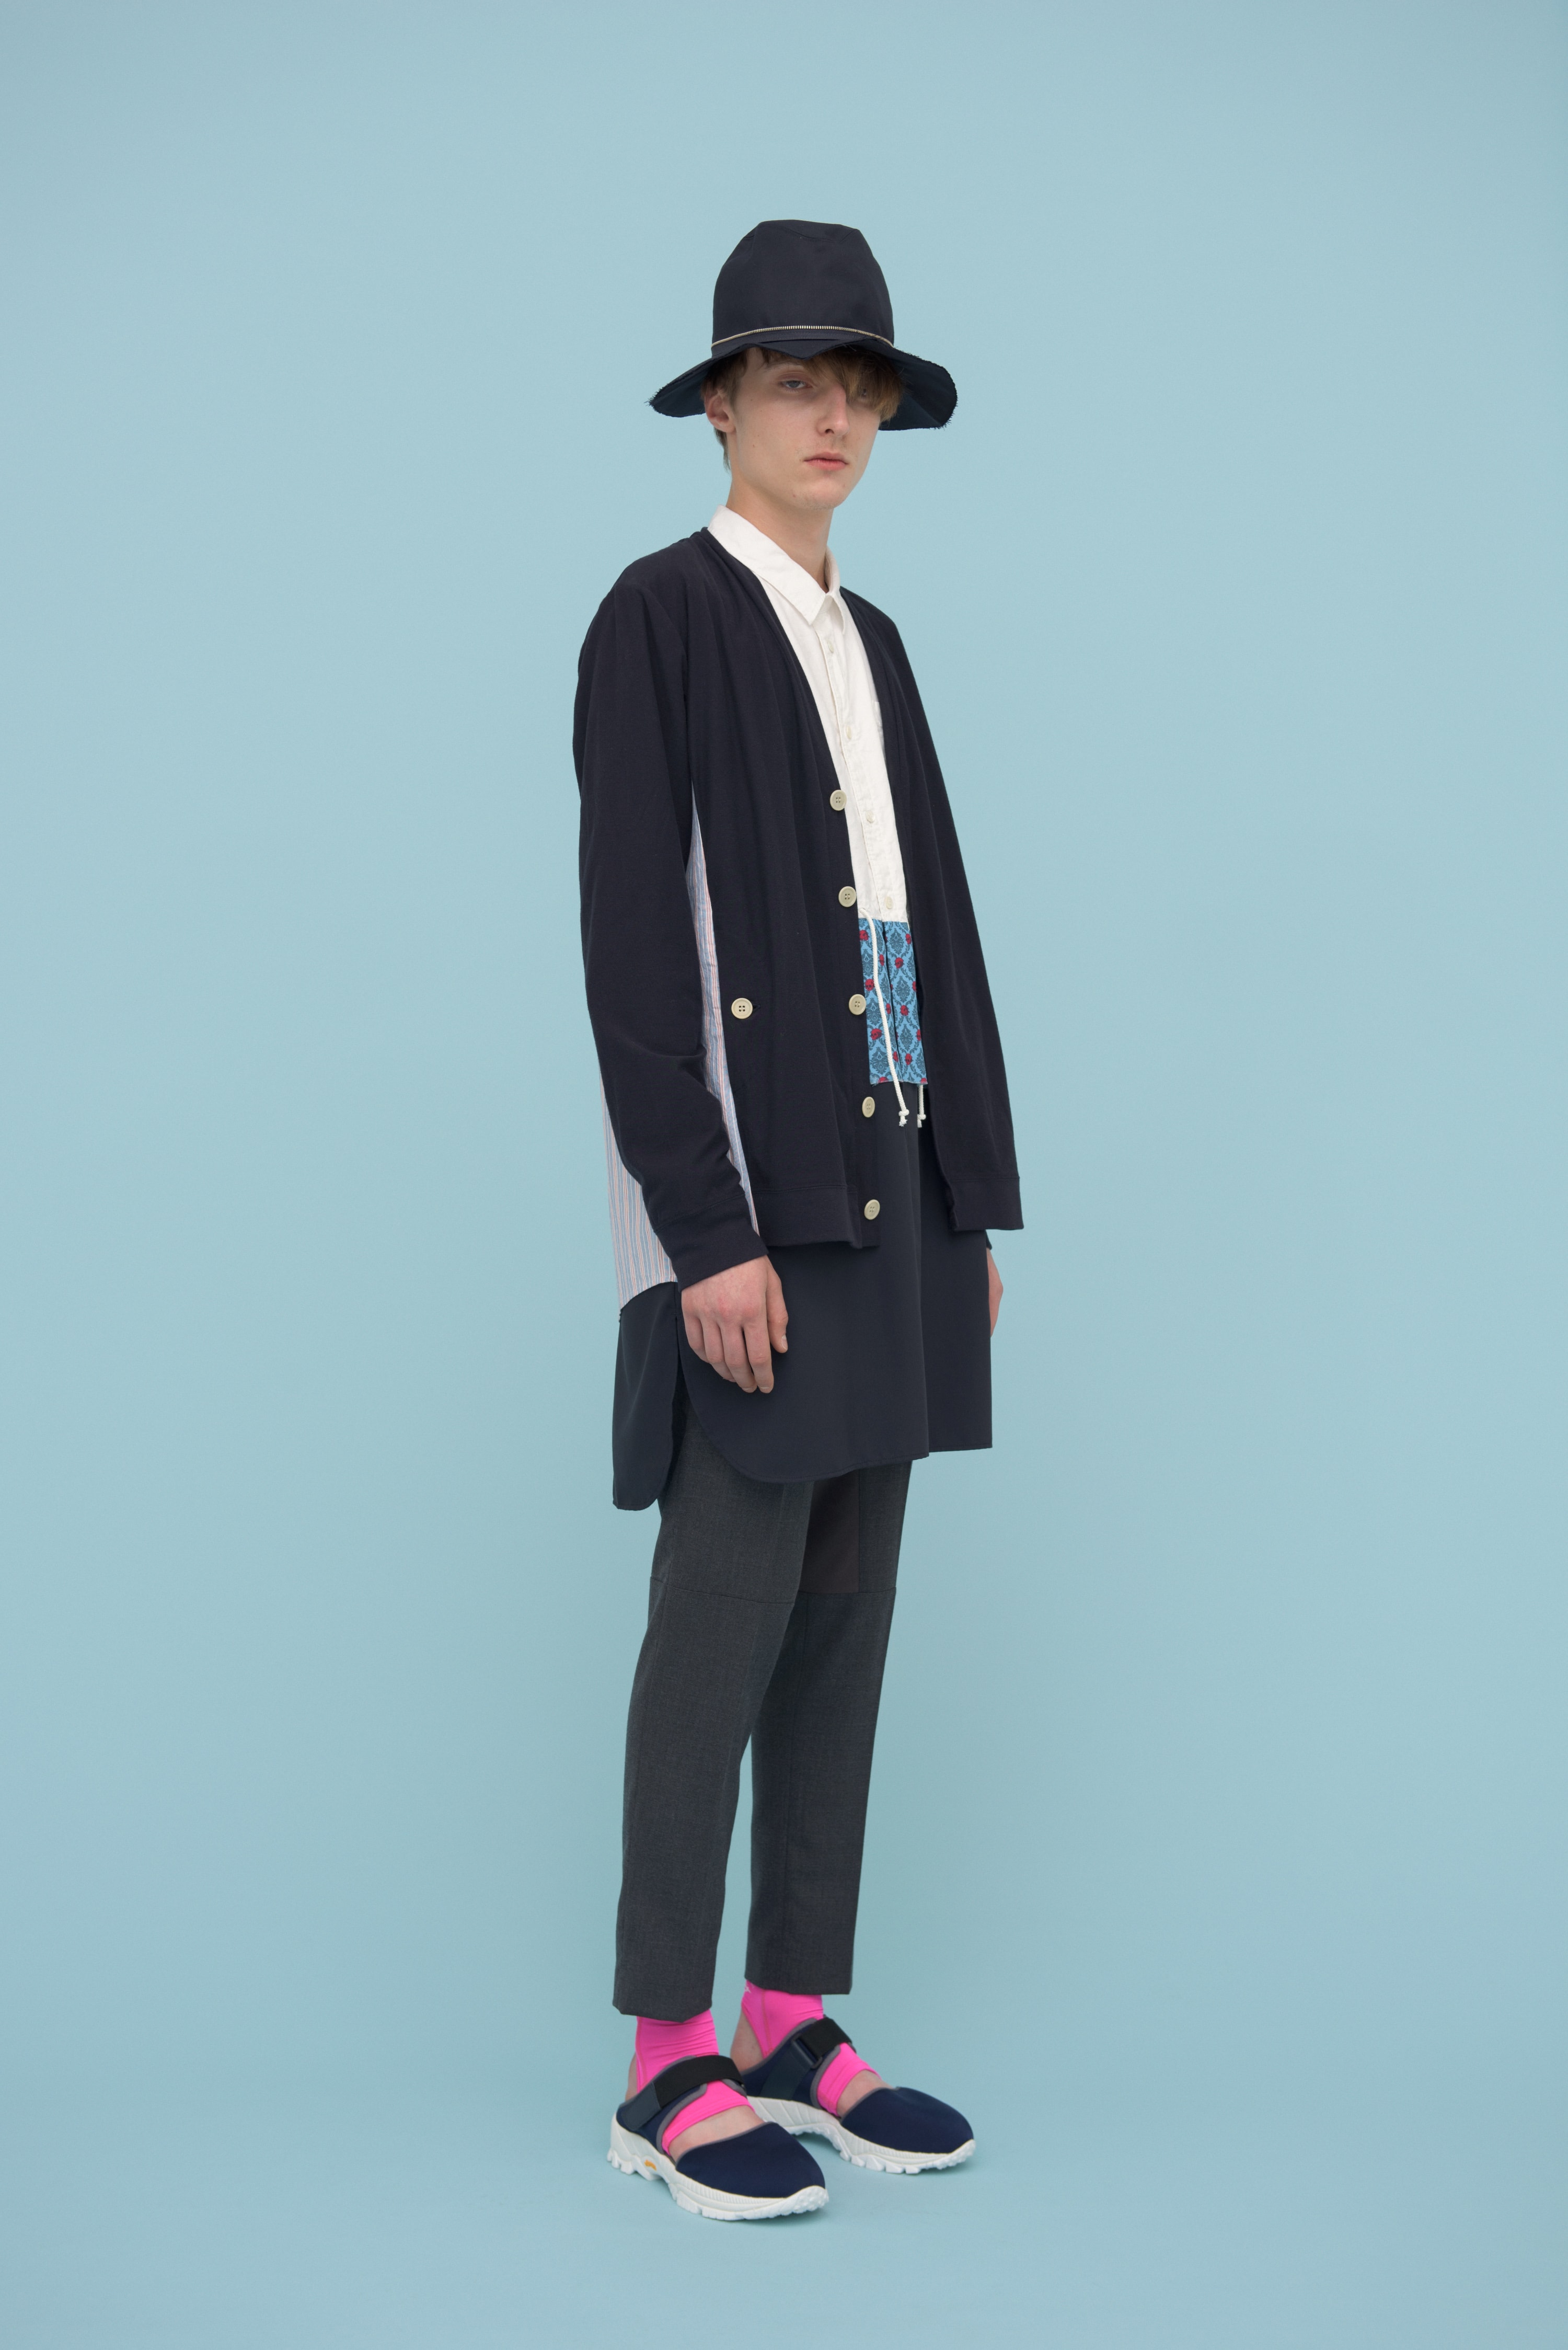 JohnUNDERCOVER Jun Takahashi Japan Fashion Clothing Apparel Streetwear Luxury Bucket Hats T-Shirts Button-Downs Trousers Pants Jackets